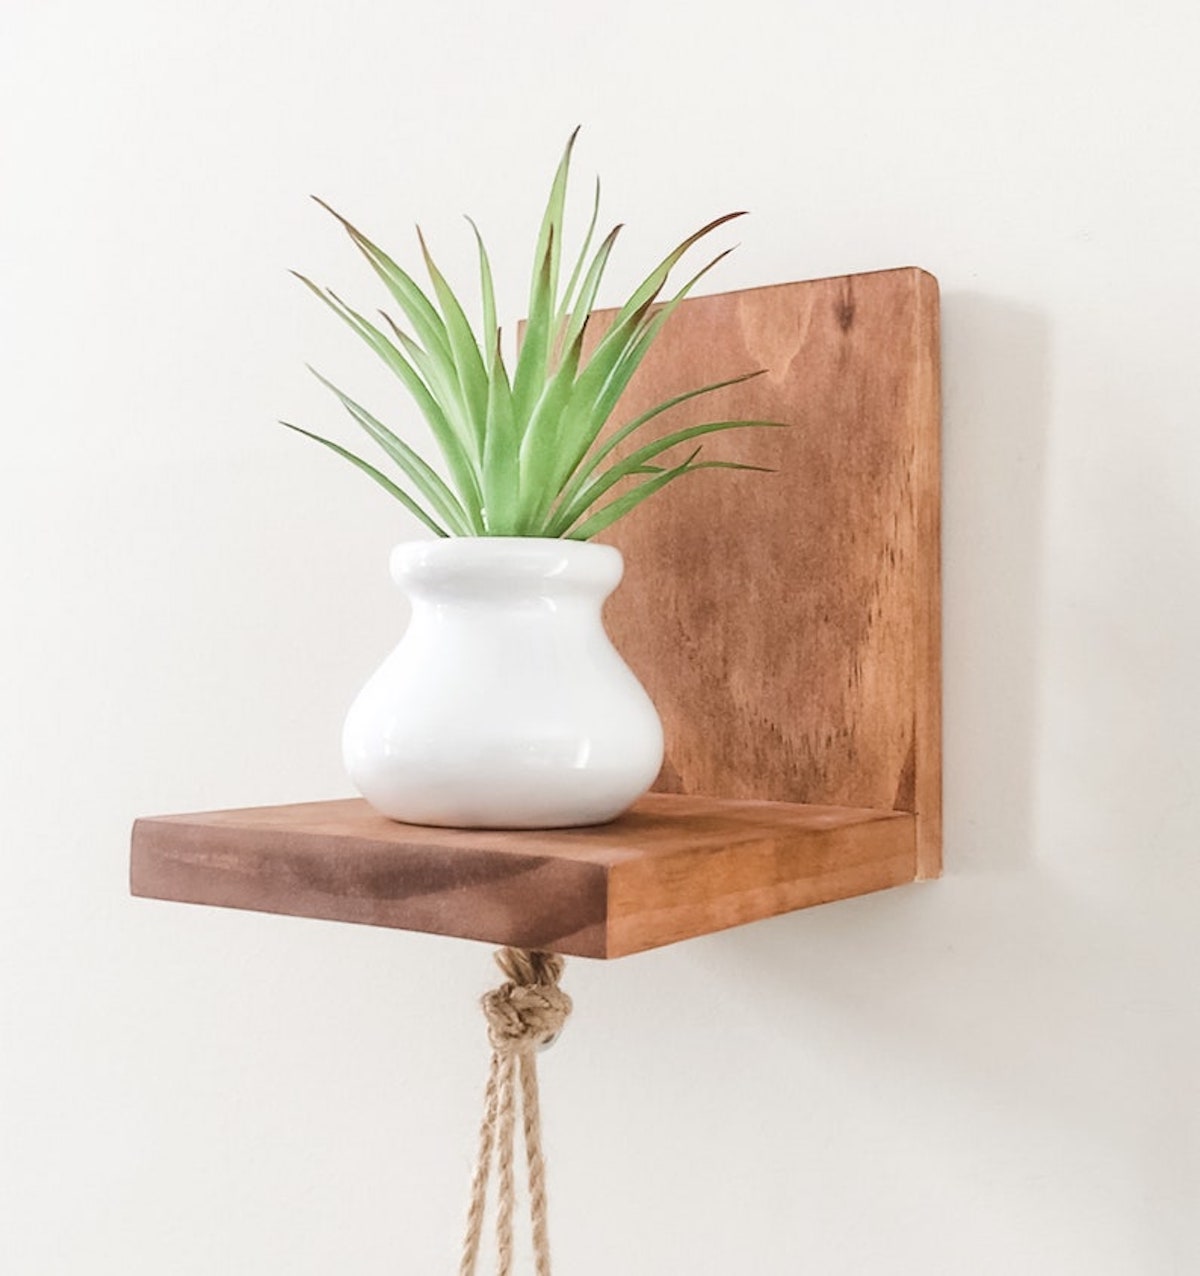 plant shelf ideas - mini succulent shelf